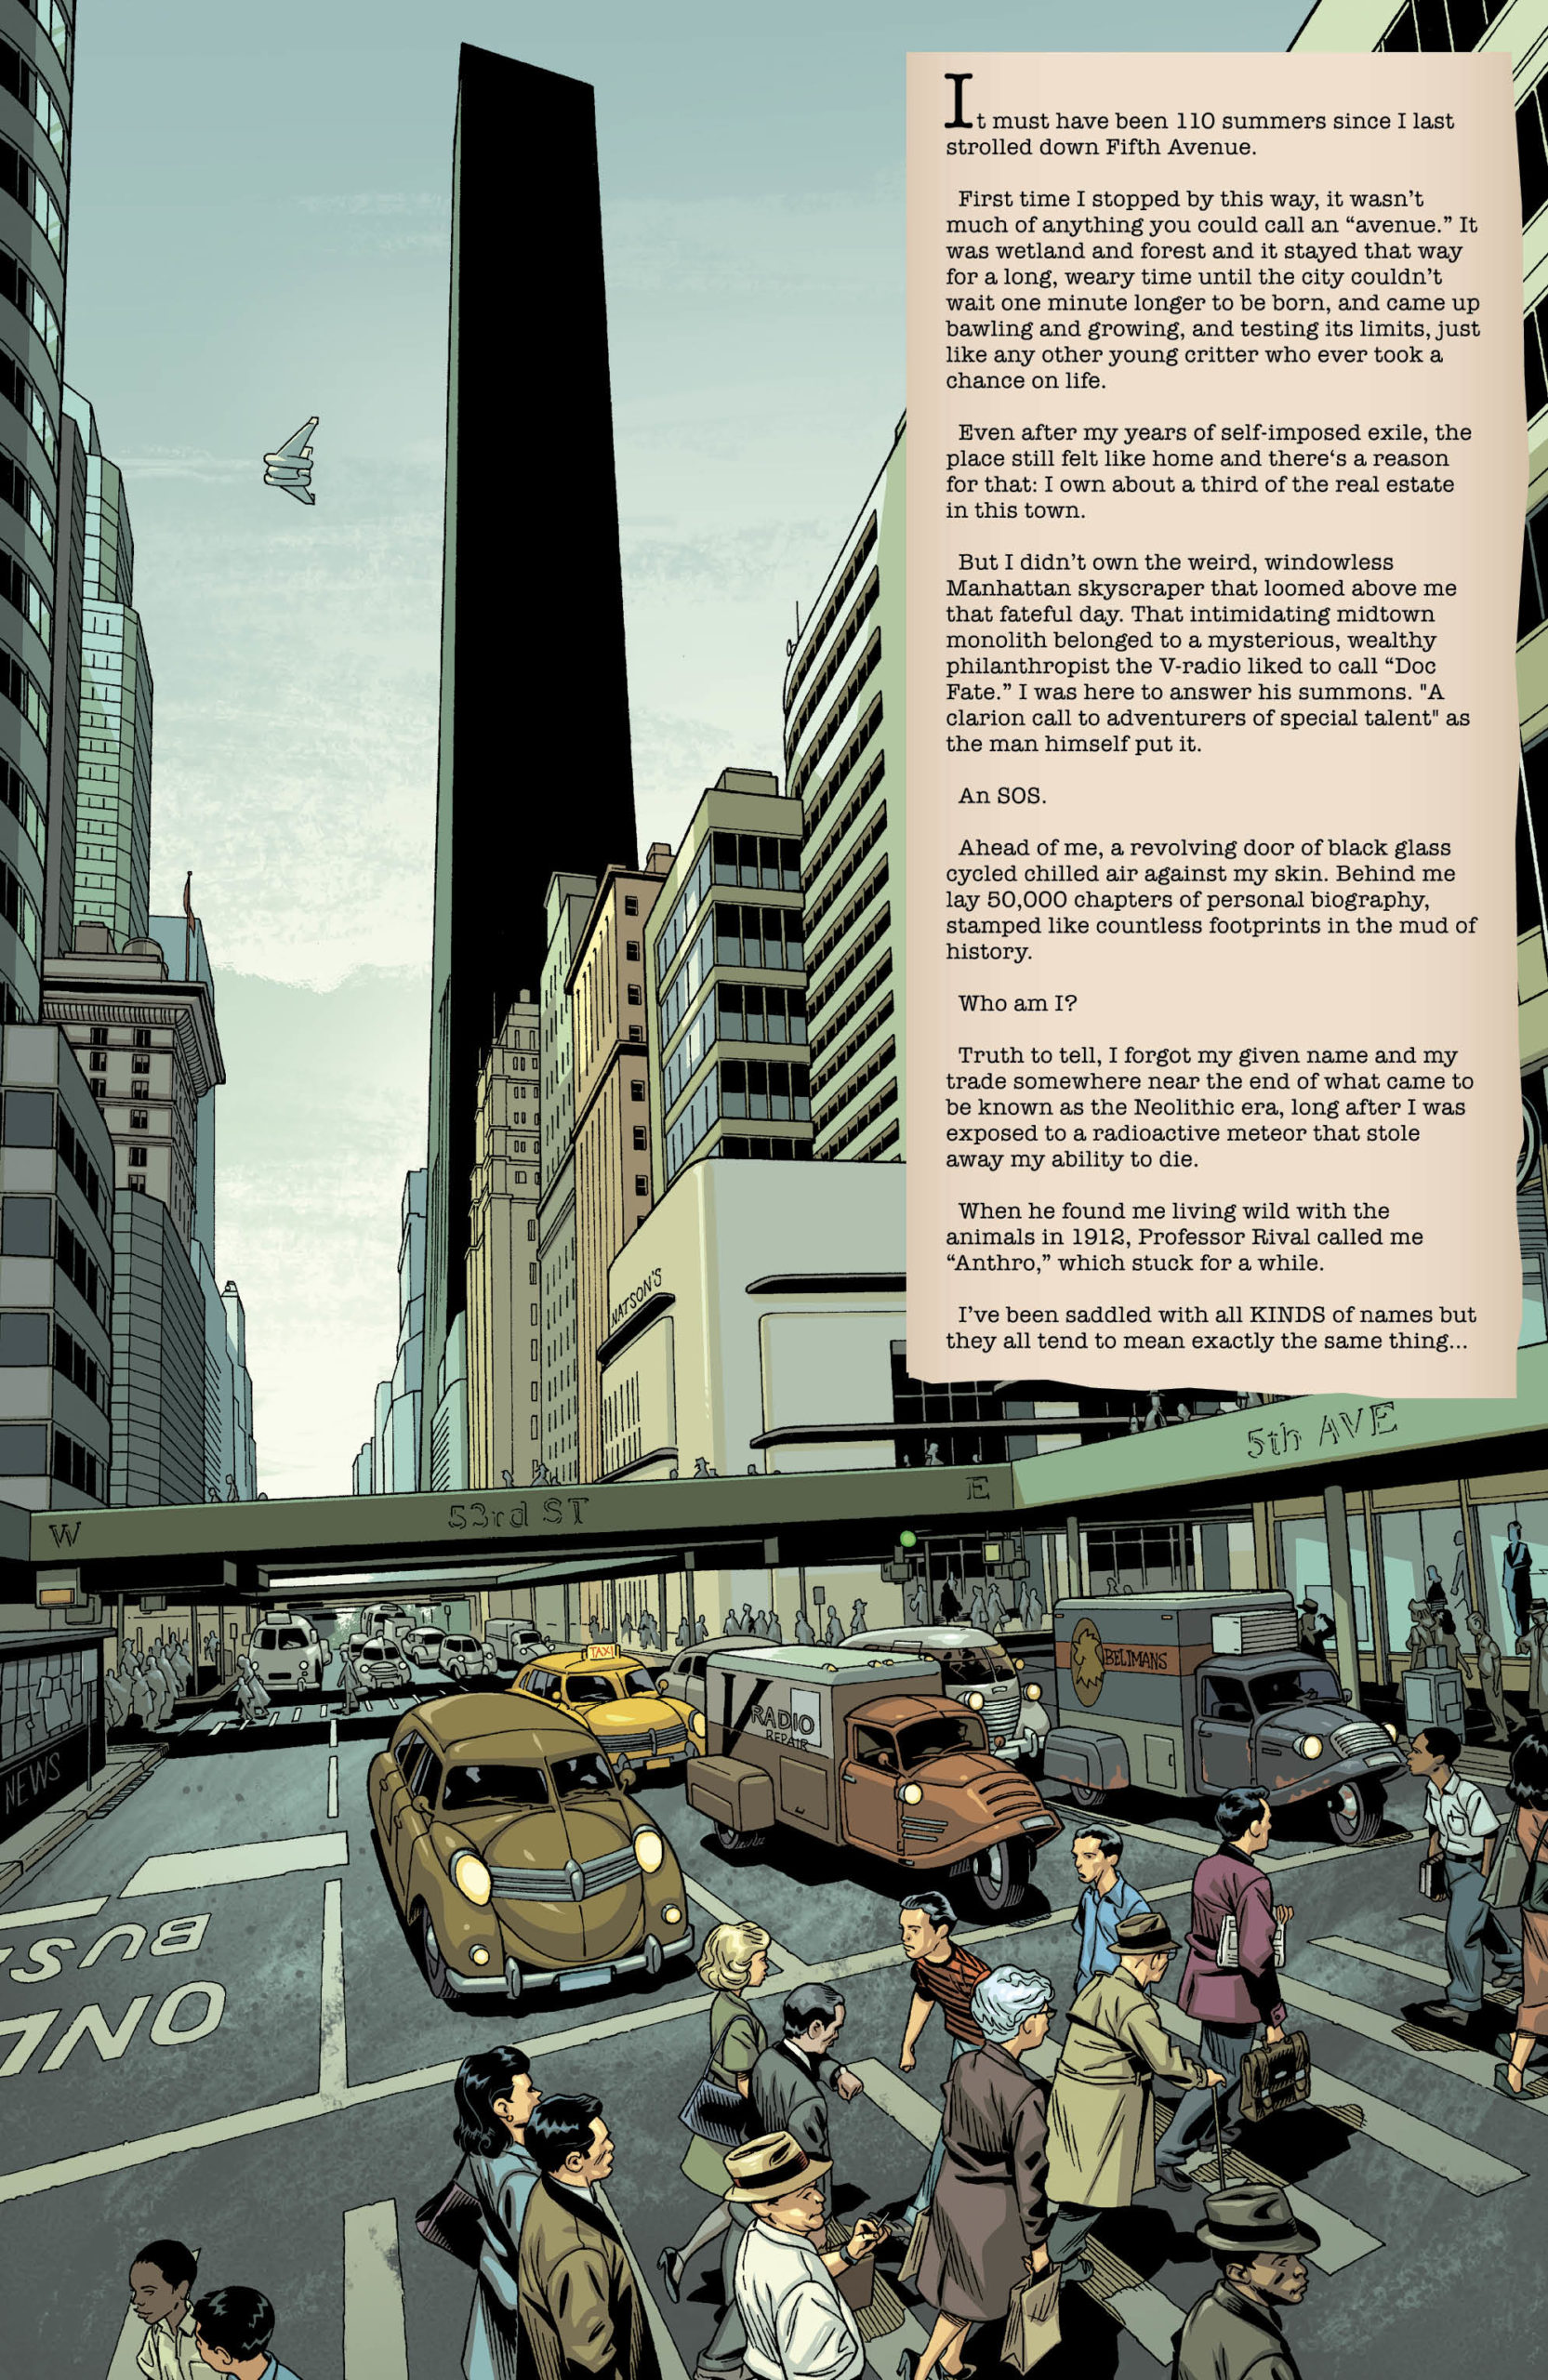 Grant Morrison’s The Multiversity Remixes What Makes DC Comics Great